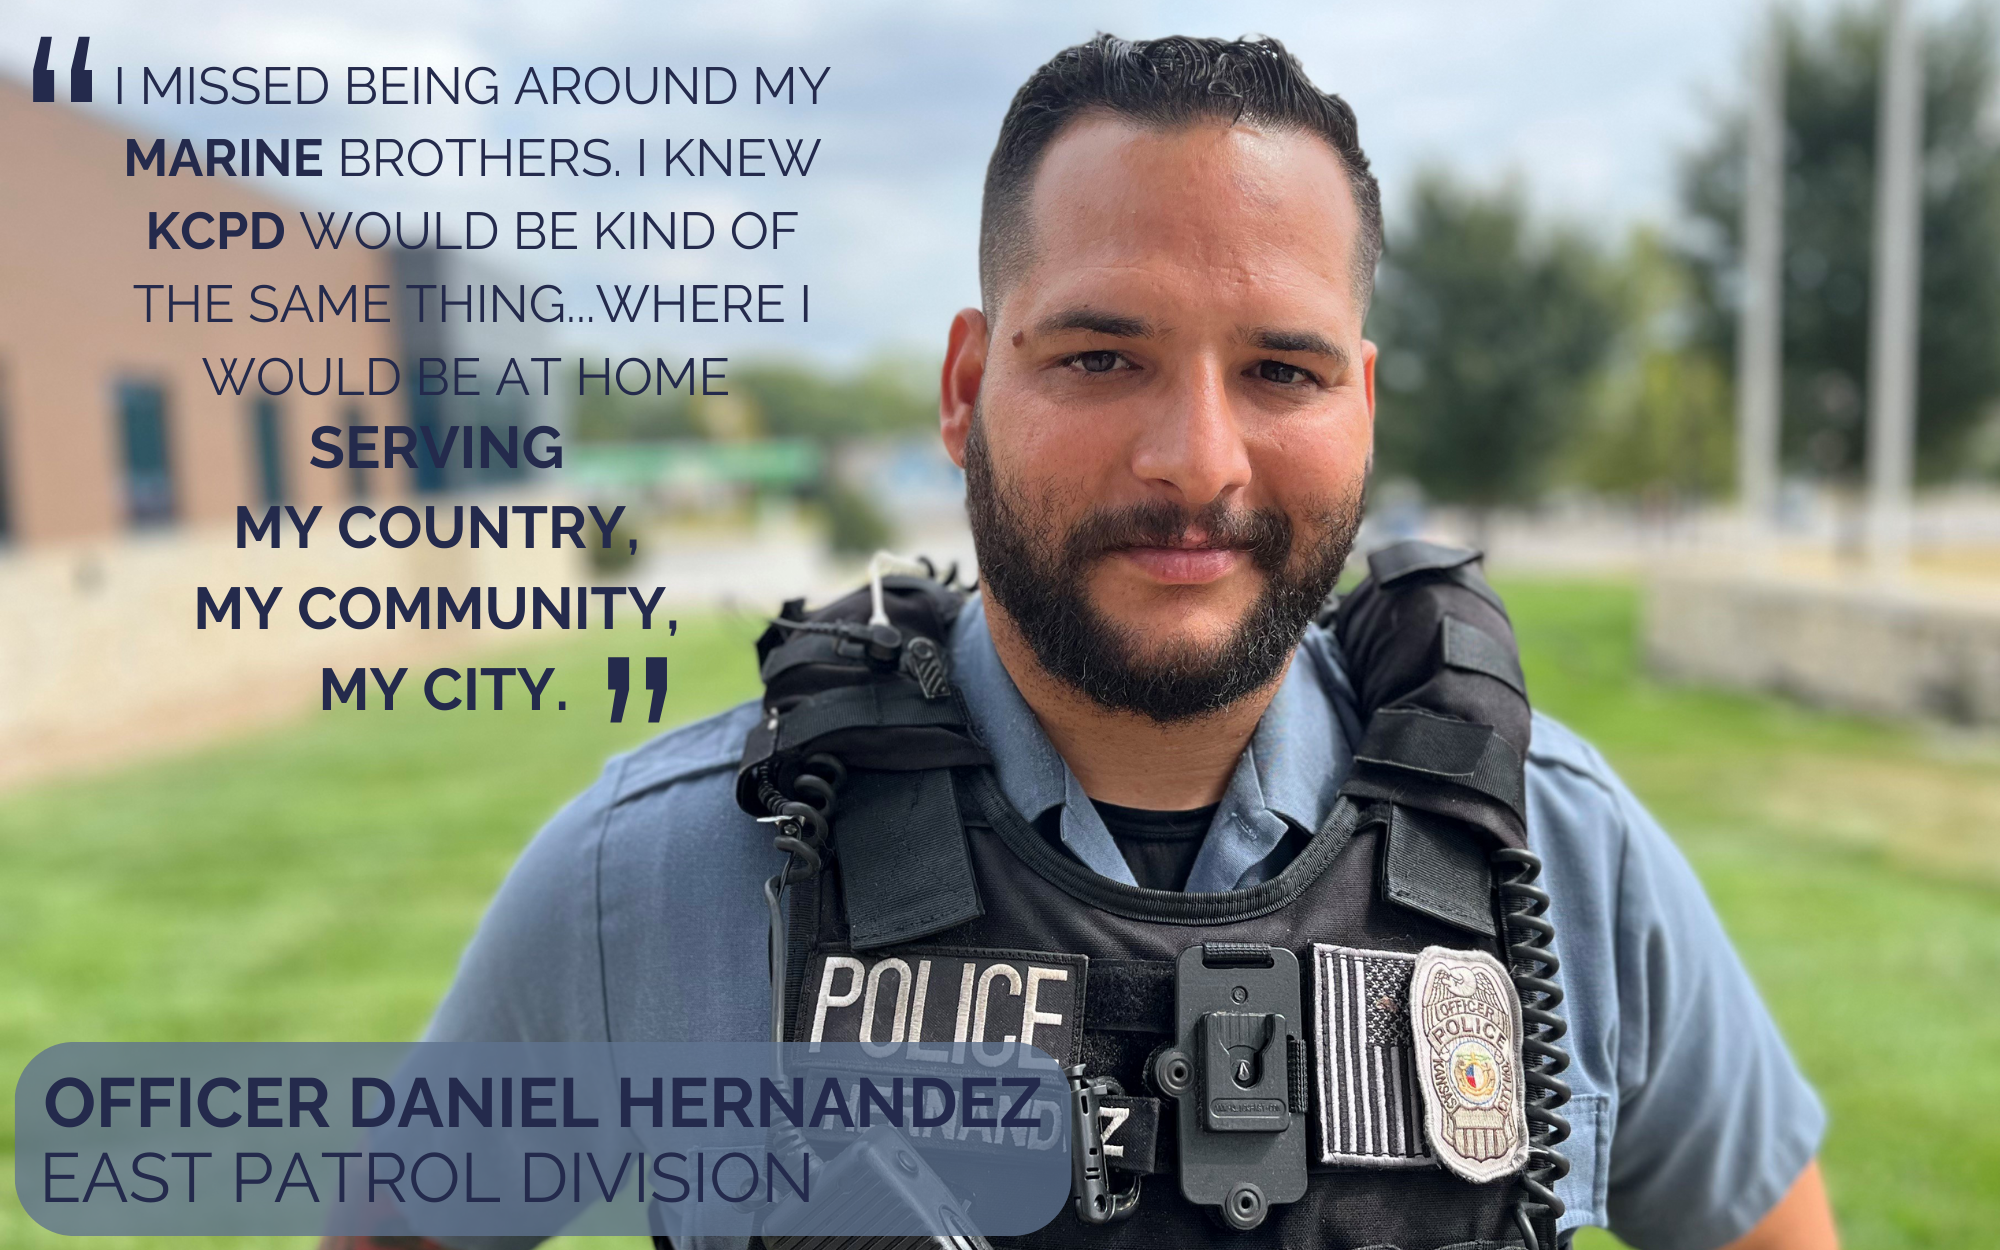 Officer Daniel Hernandez